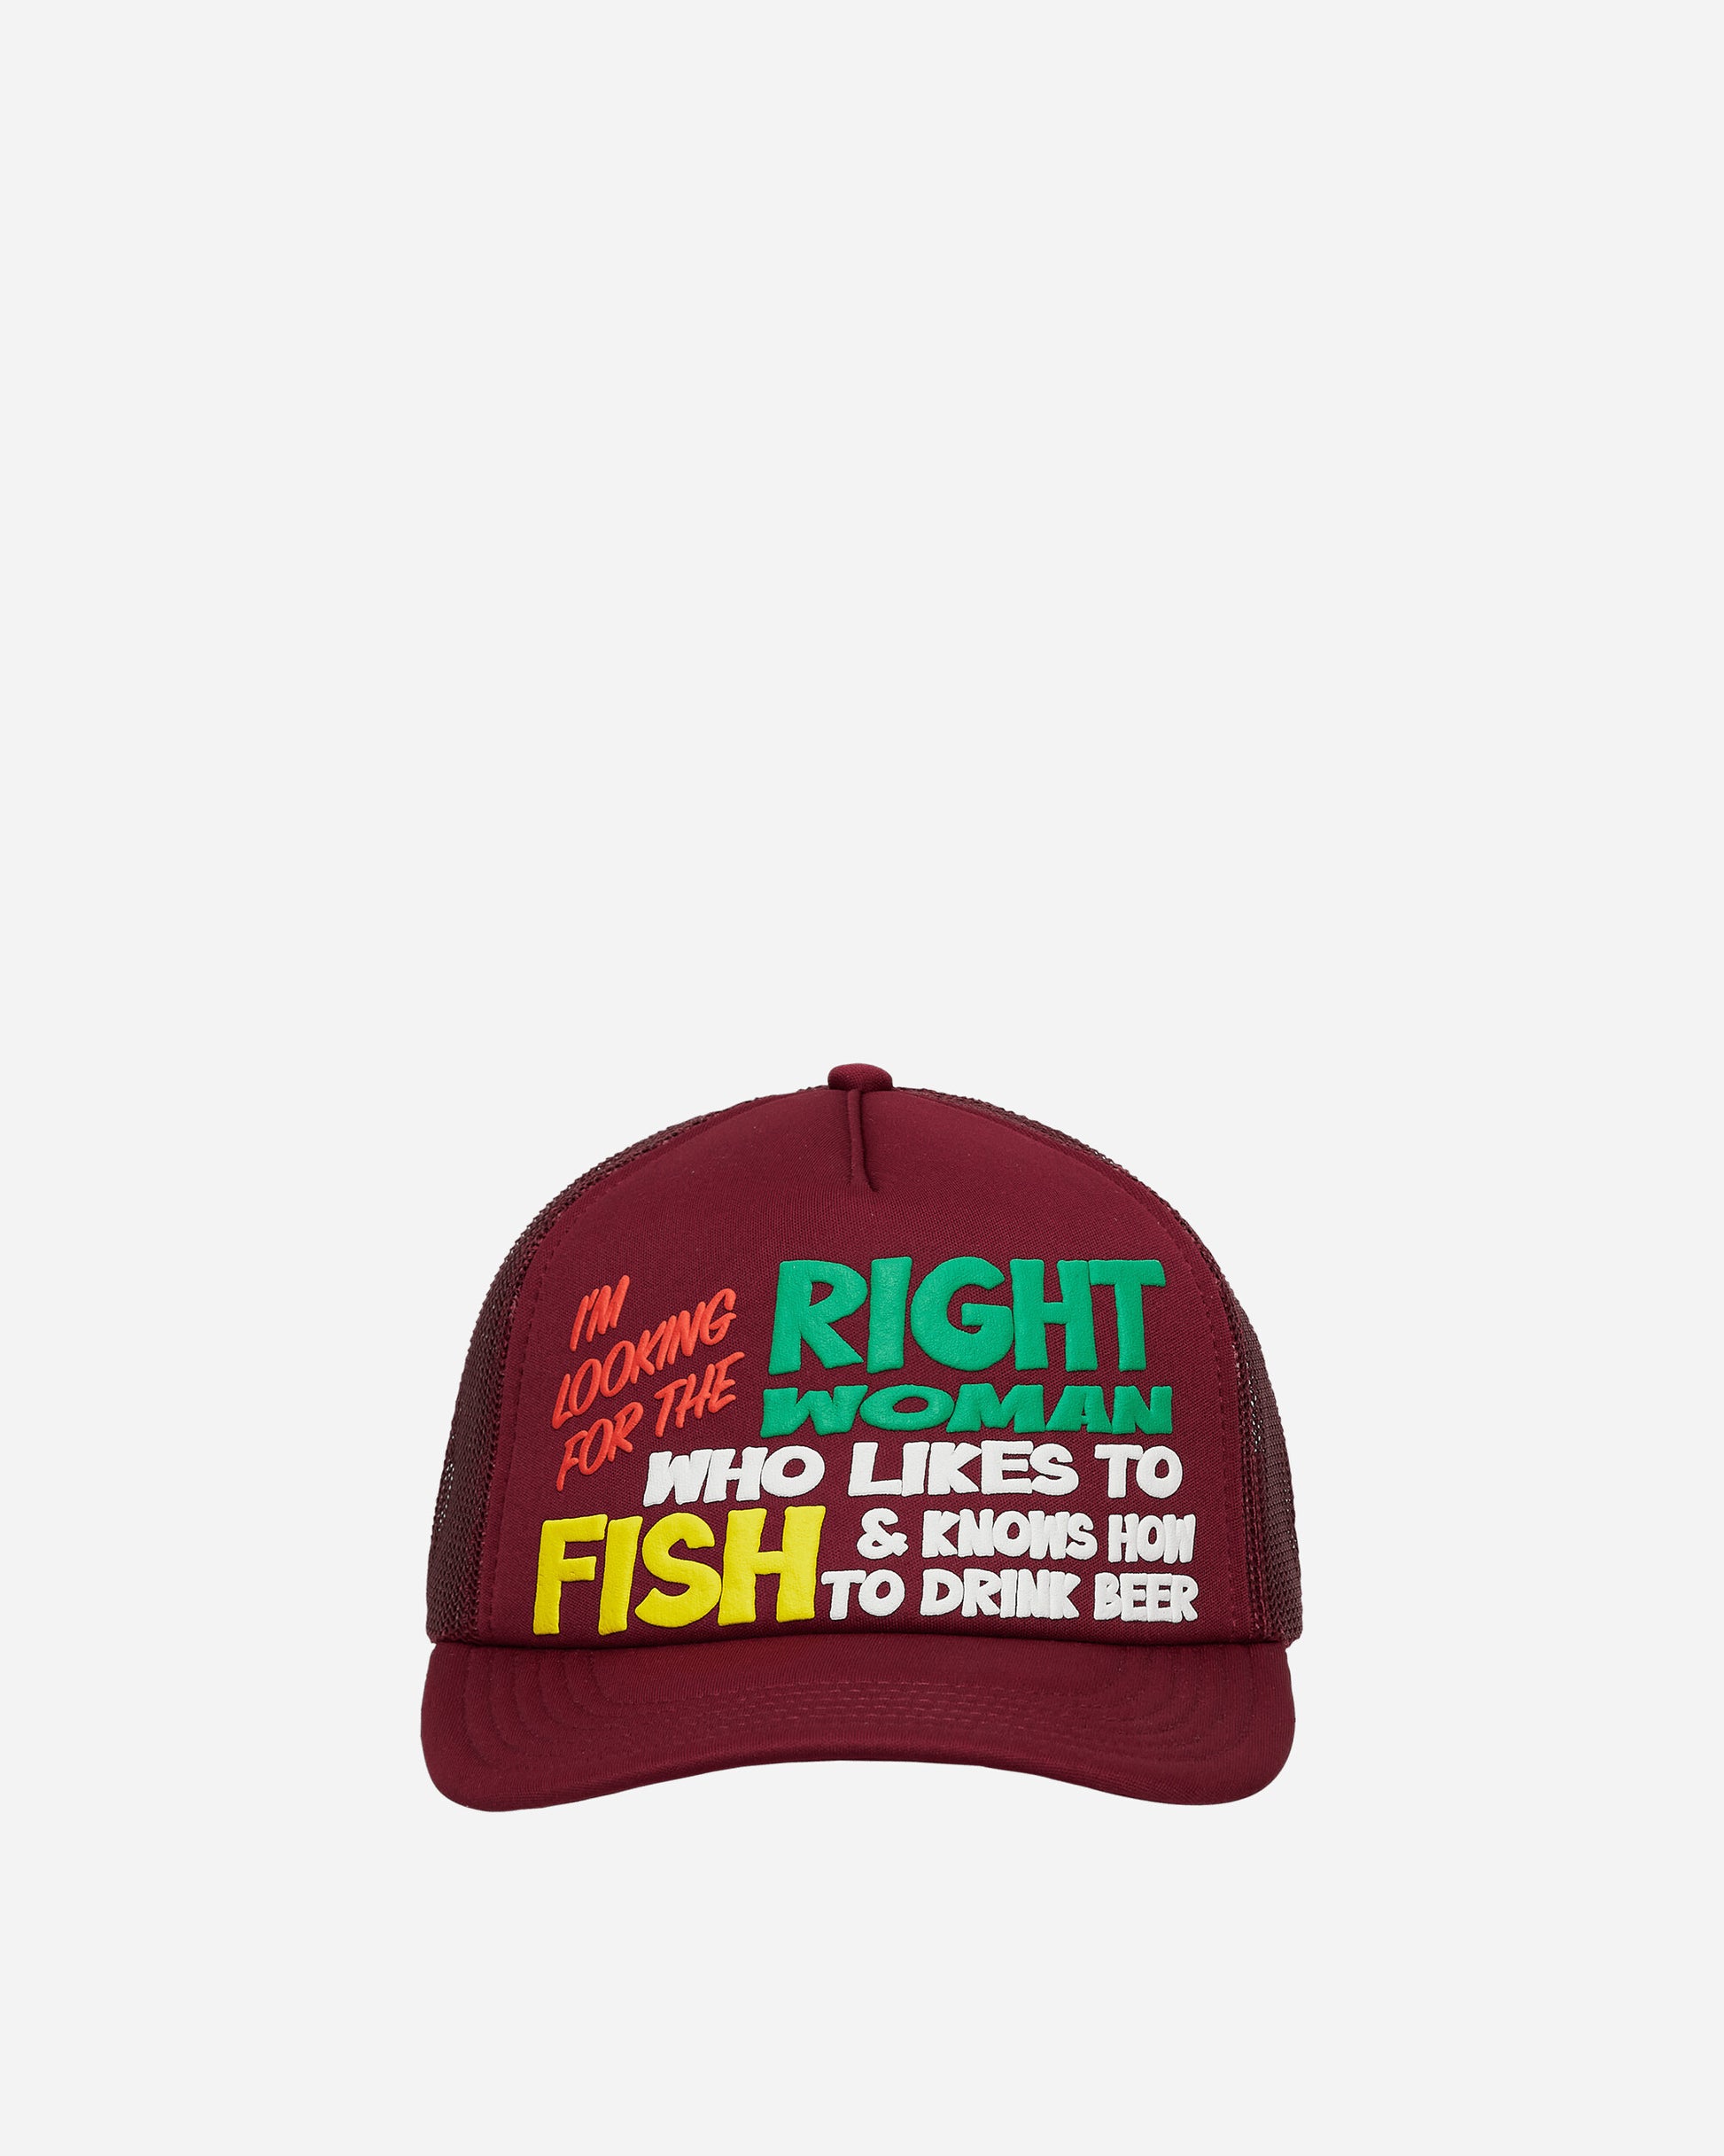 WESTERN HYDRODYNAMIC RESEARCH Fishing Hat Maroon Hats Caps MWHR24SPSU4005 MAROON